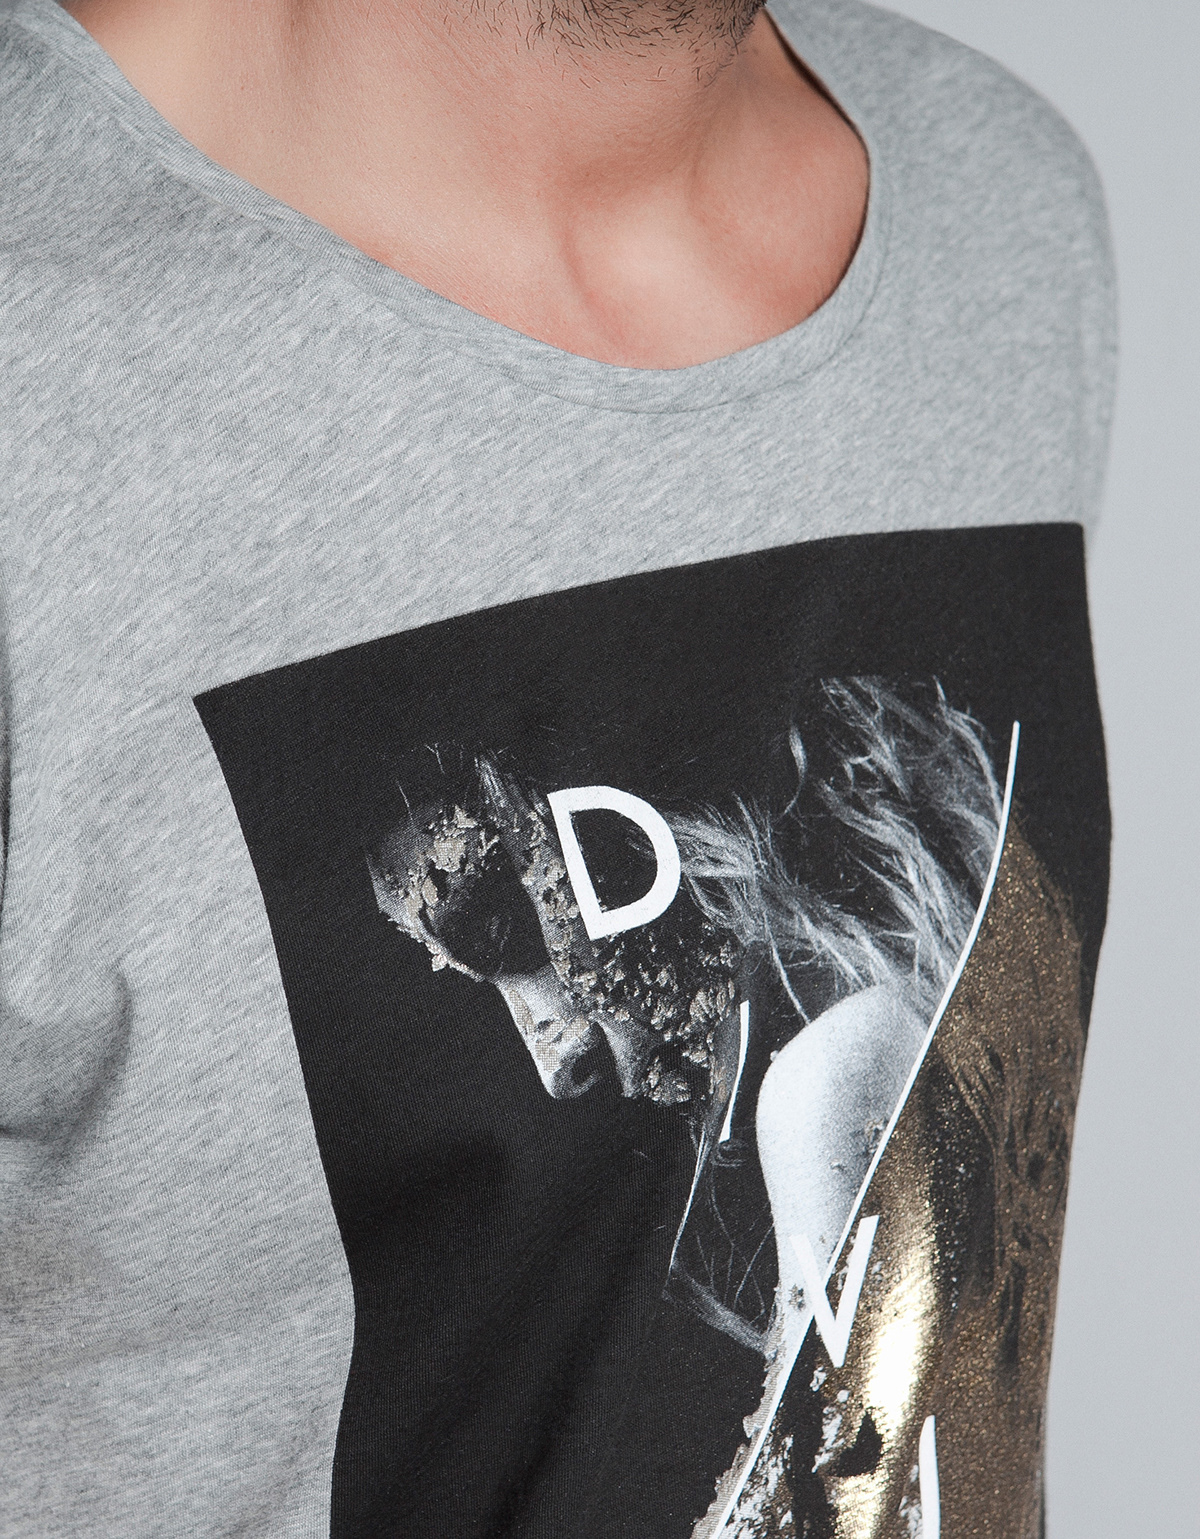 editorial print zara daniel marques t-shirt